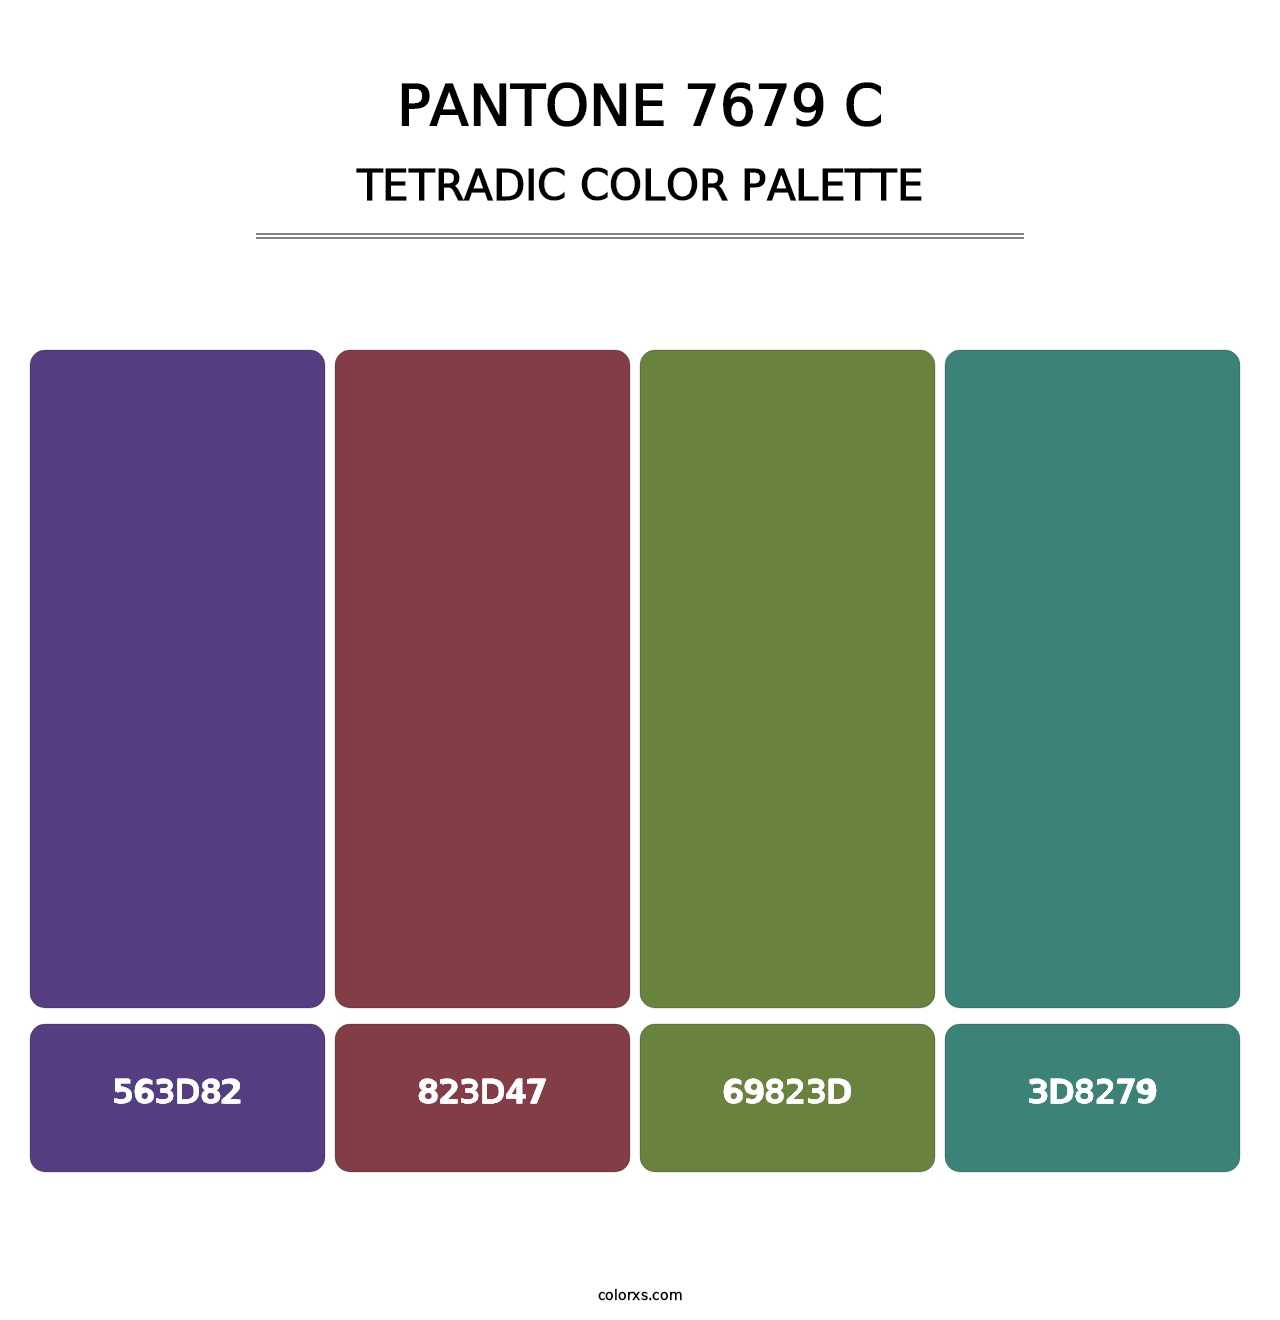 PANTONE 7679 C - Tetradic Color Palette